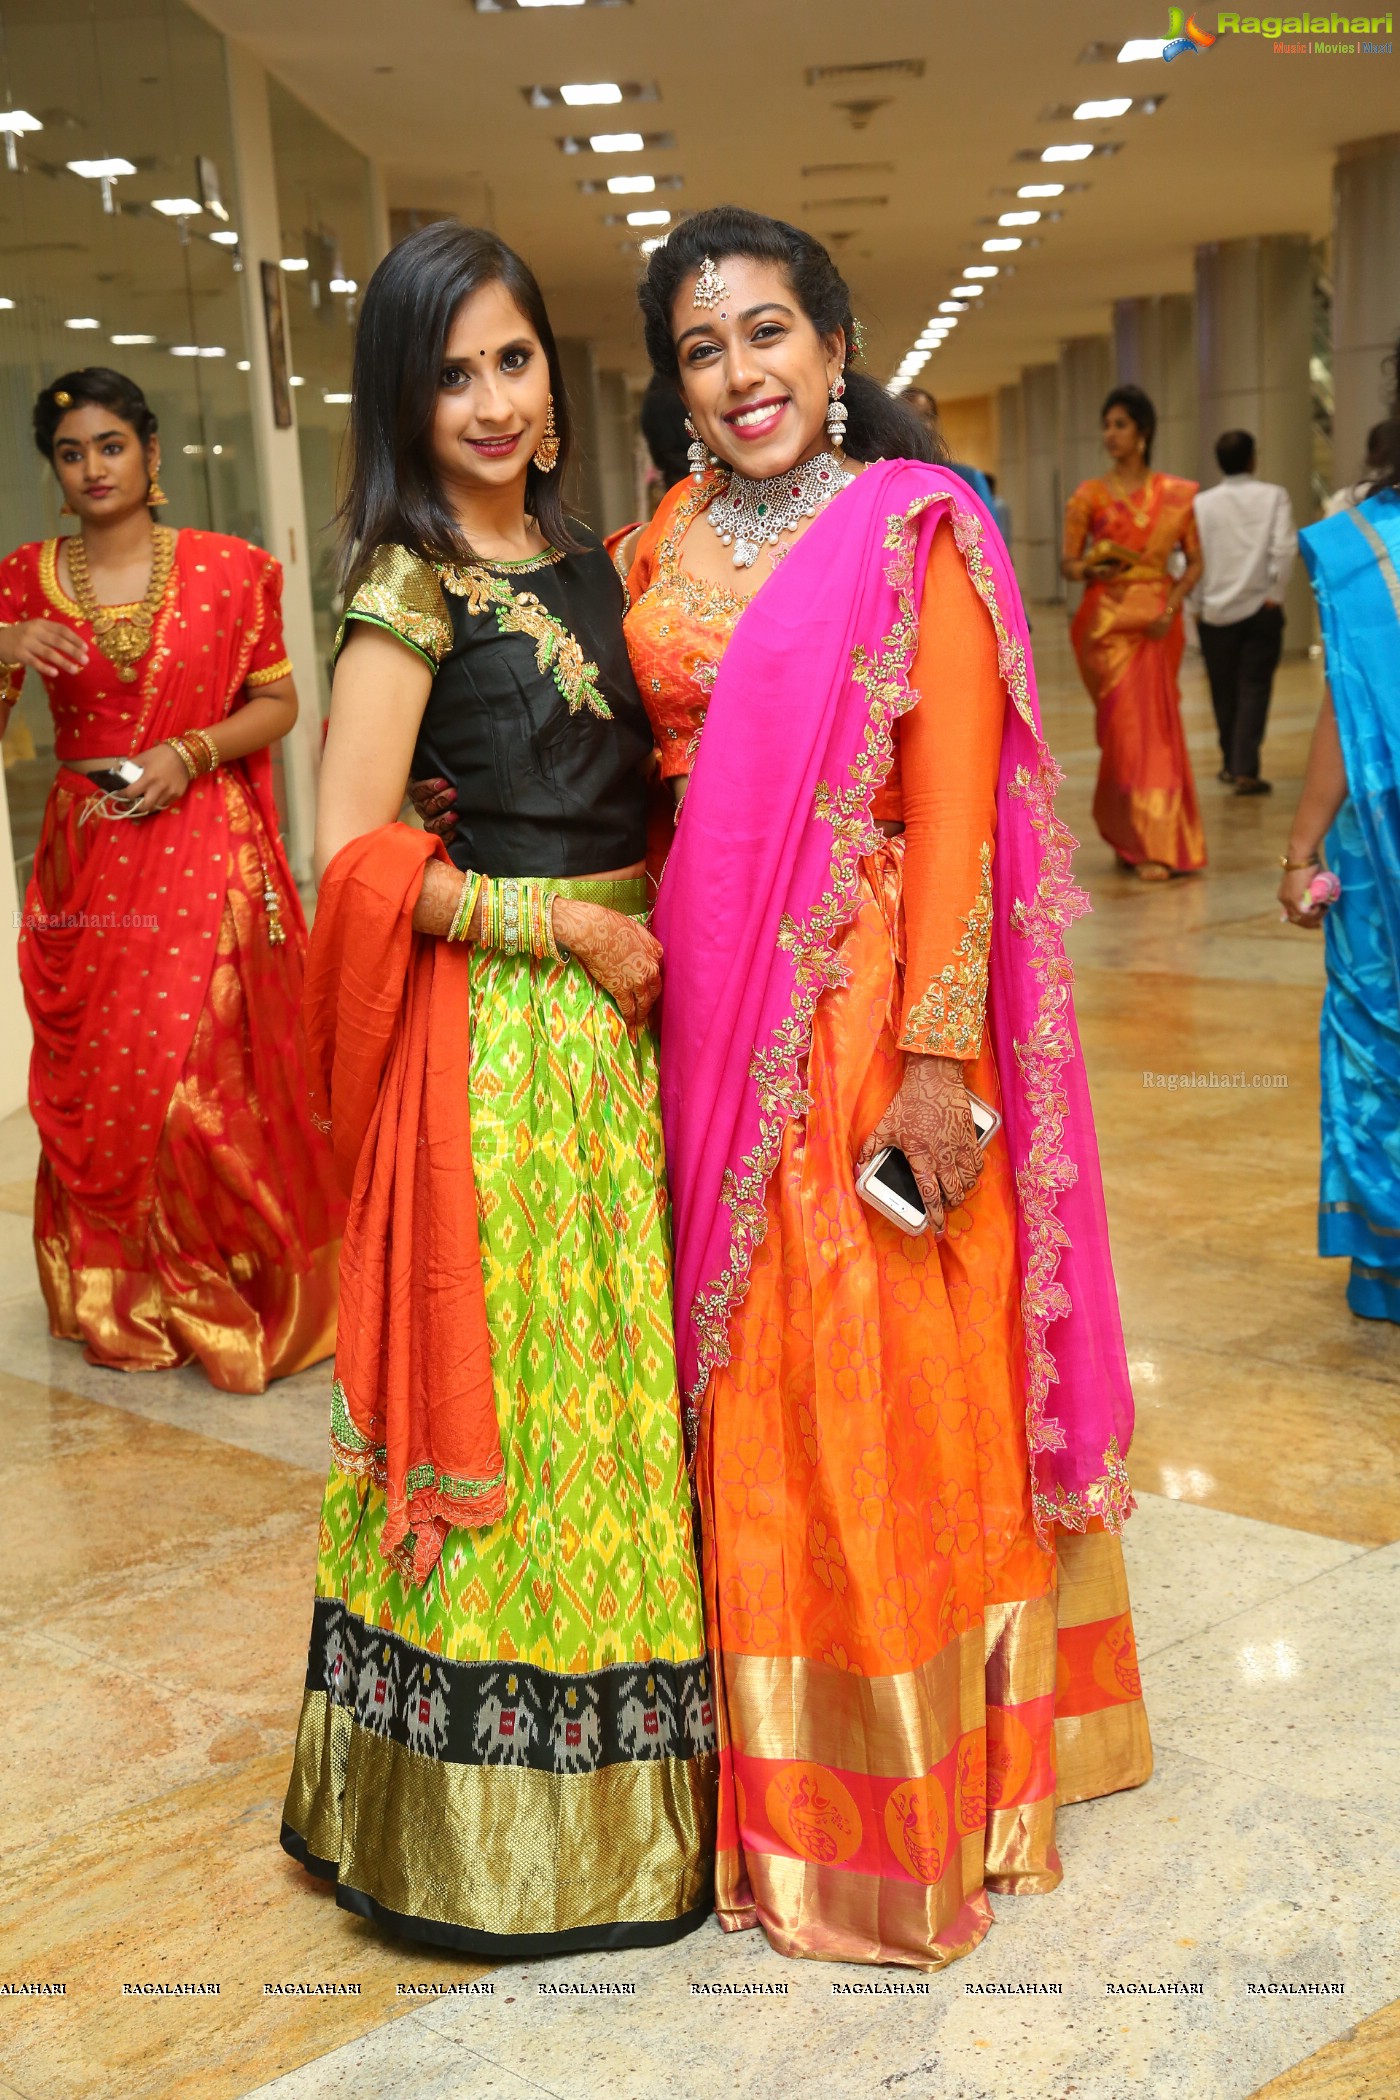 Grand Wedding Reception Ceremony of Ramana with Laya at HICC Novotel, Hyderabad